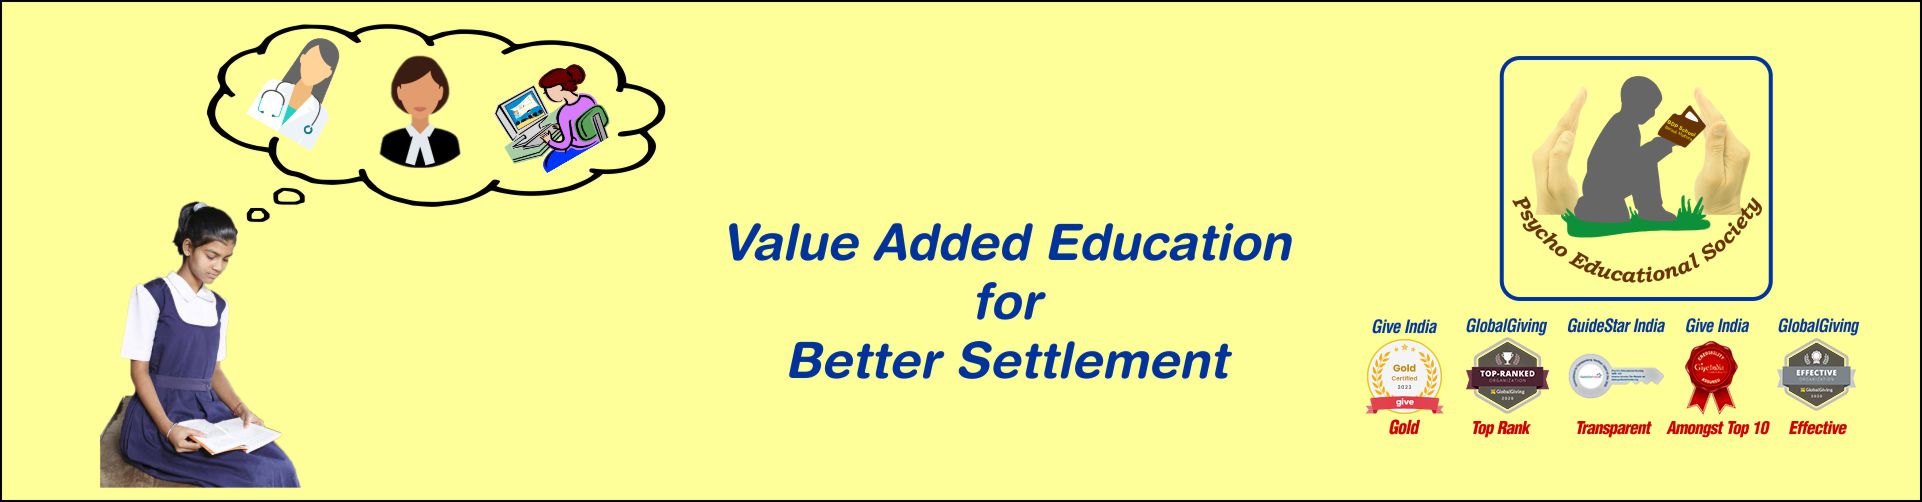 Value-Added-Education